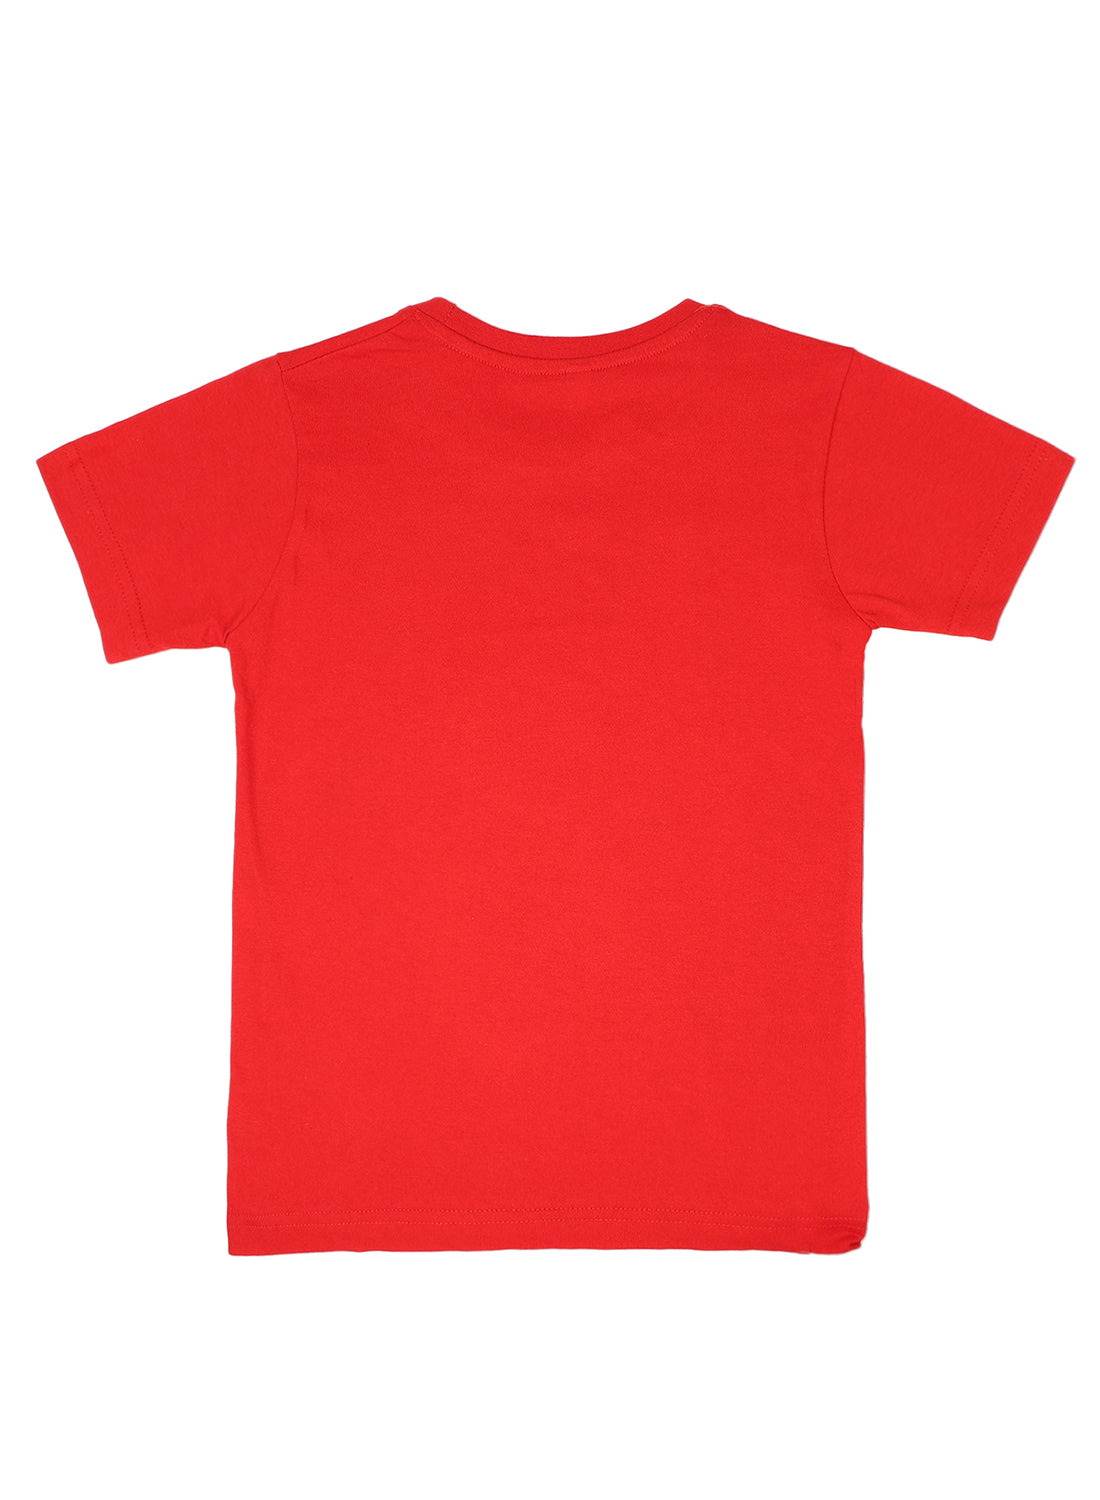 Kids Printed round neck Red t-shirt